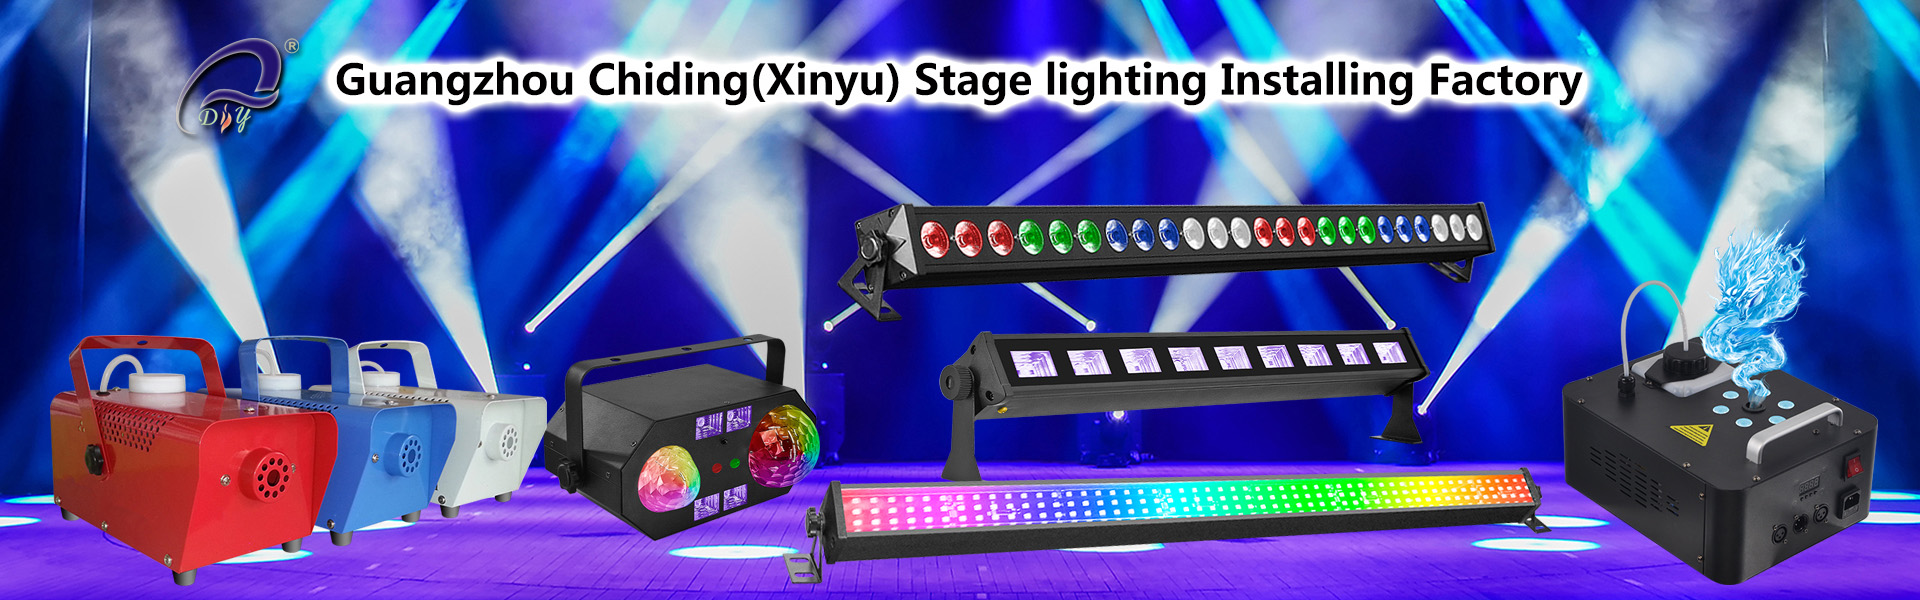 stage lights,moving head light,led par light,guangzhou chiding stage lighting co ltd